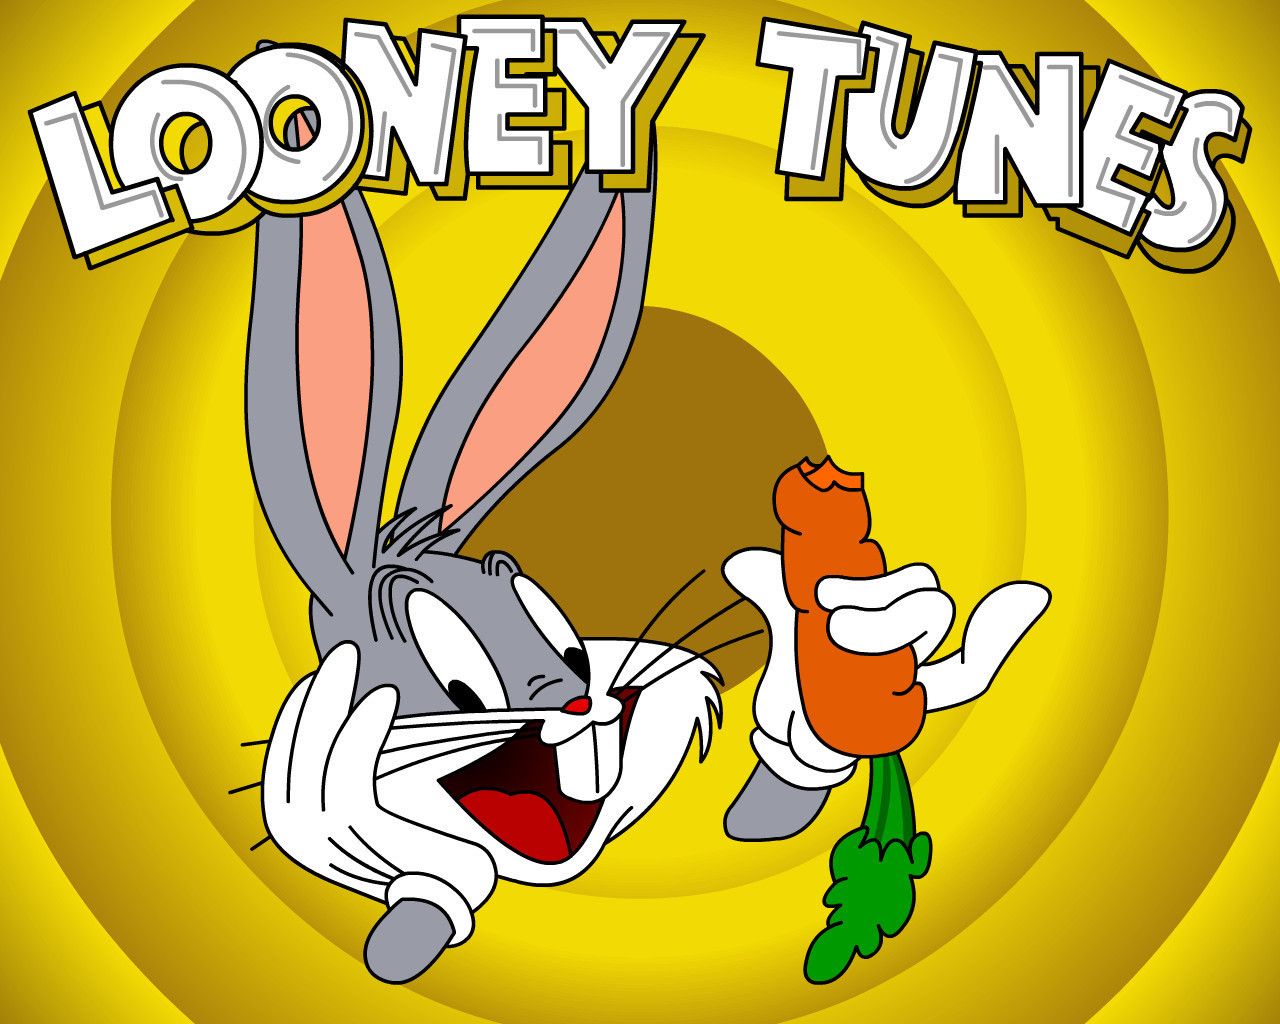 Bugs bunny is a classic cartoon character - Bugs Bunny